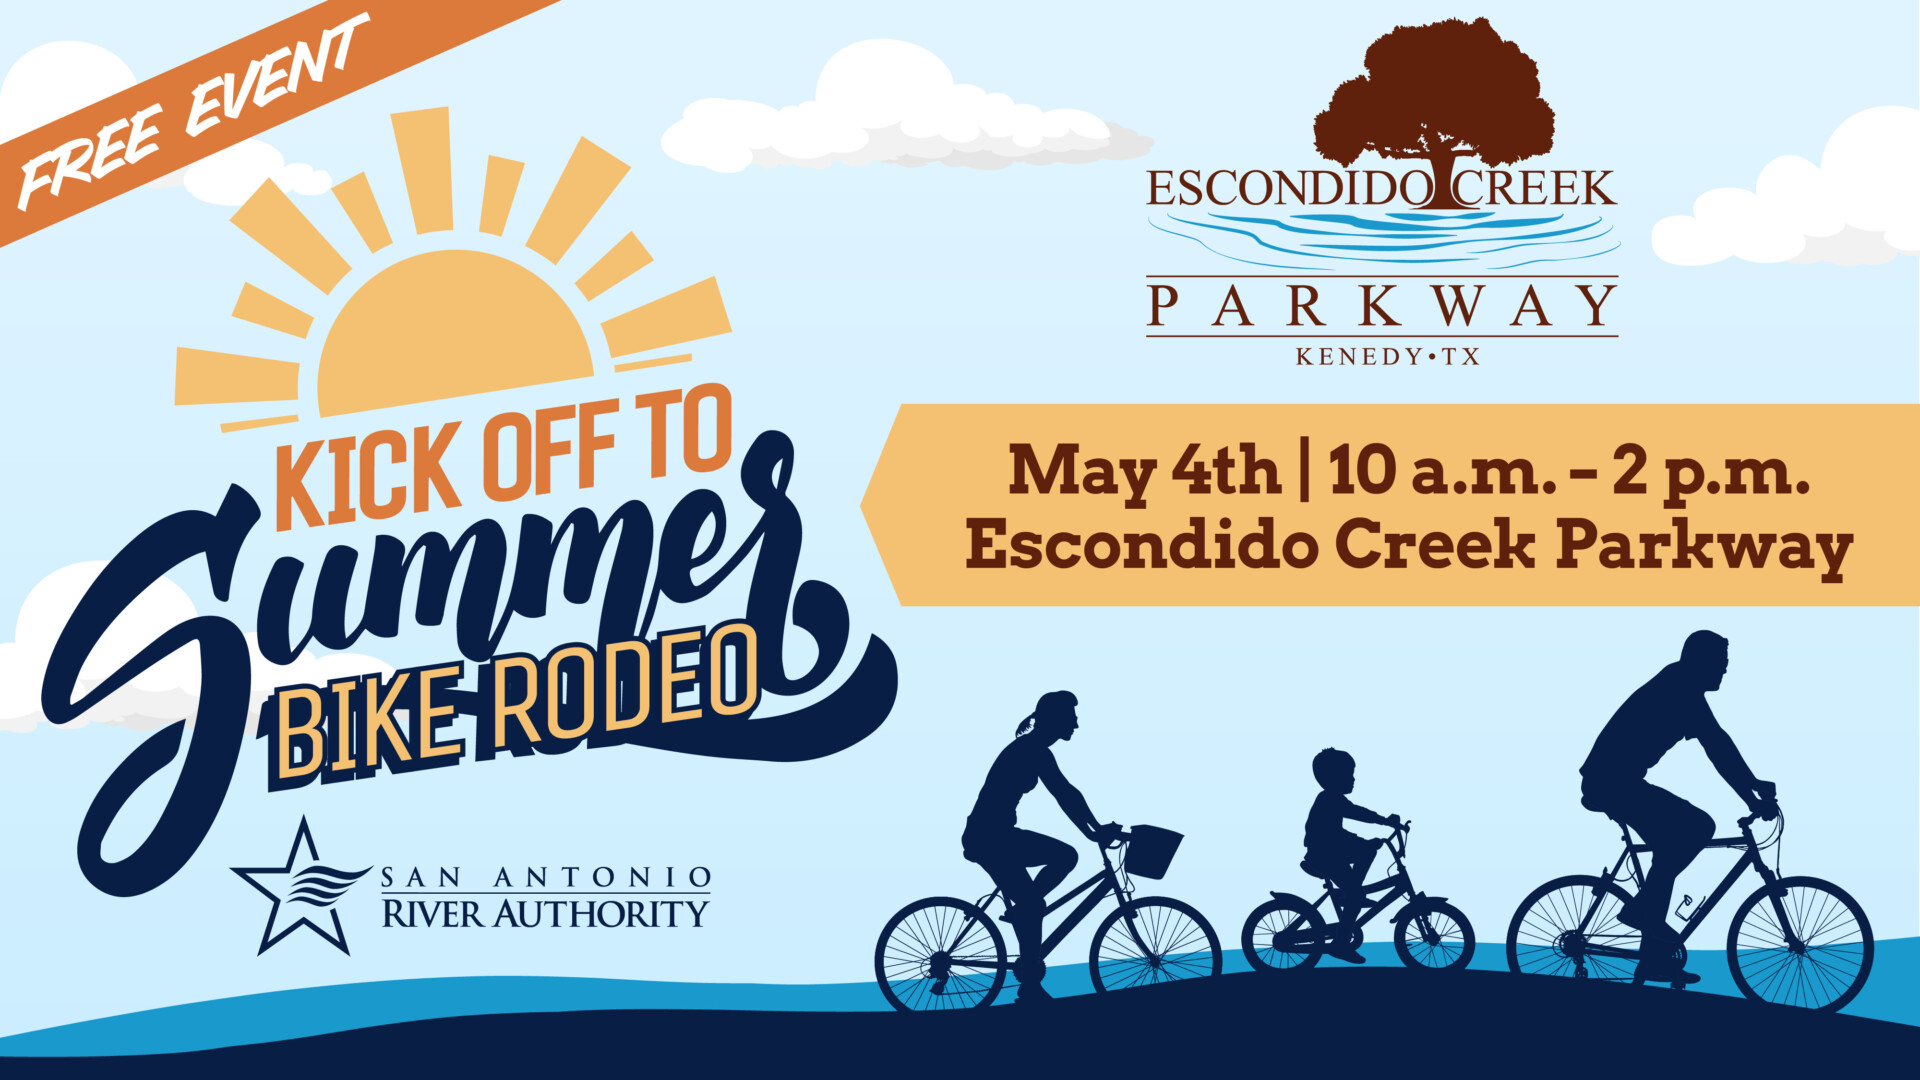 San Antonio River Authority Kick off to Summer Bike Rodeo